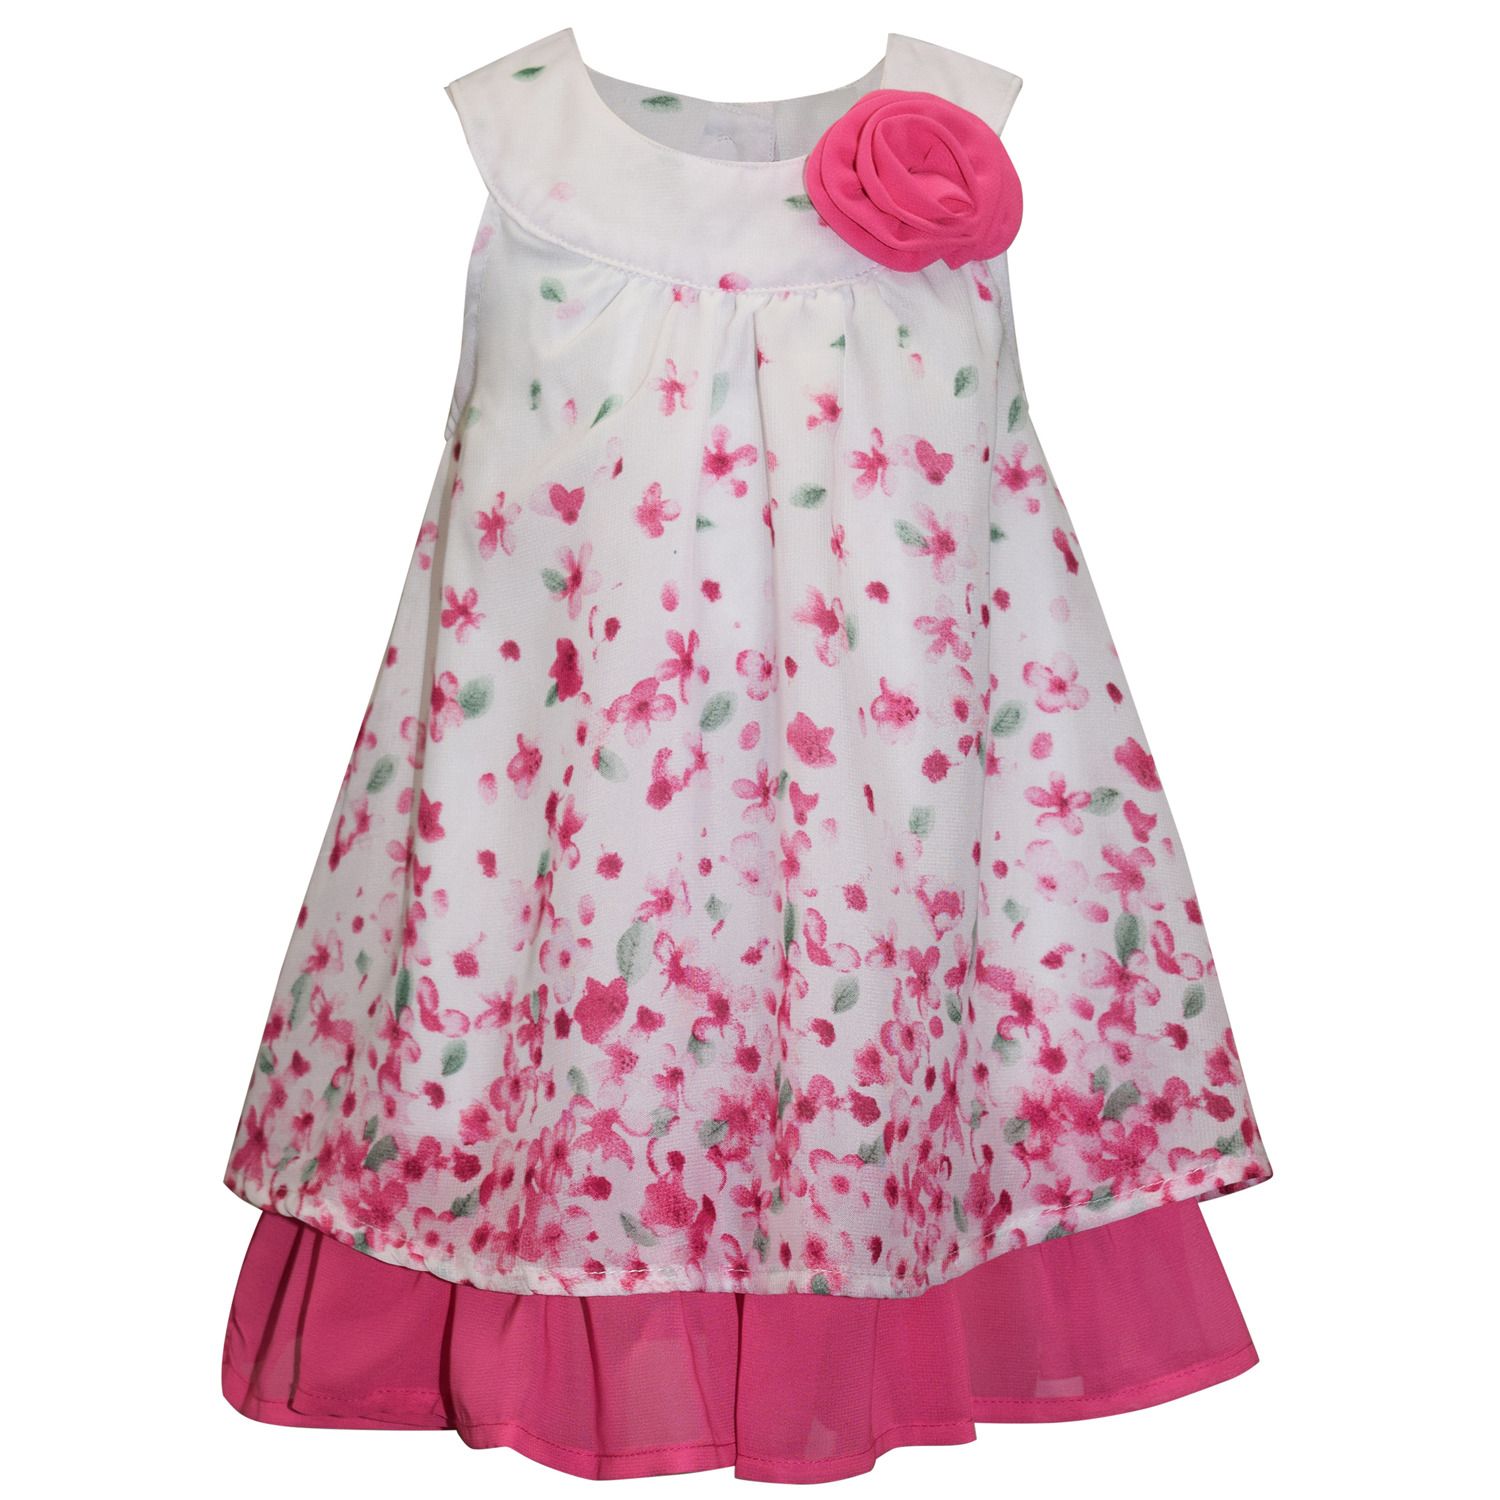 chiffon dress for baby girl